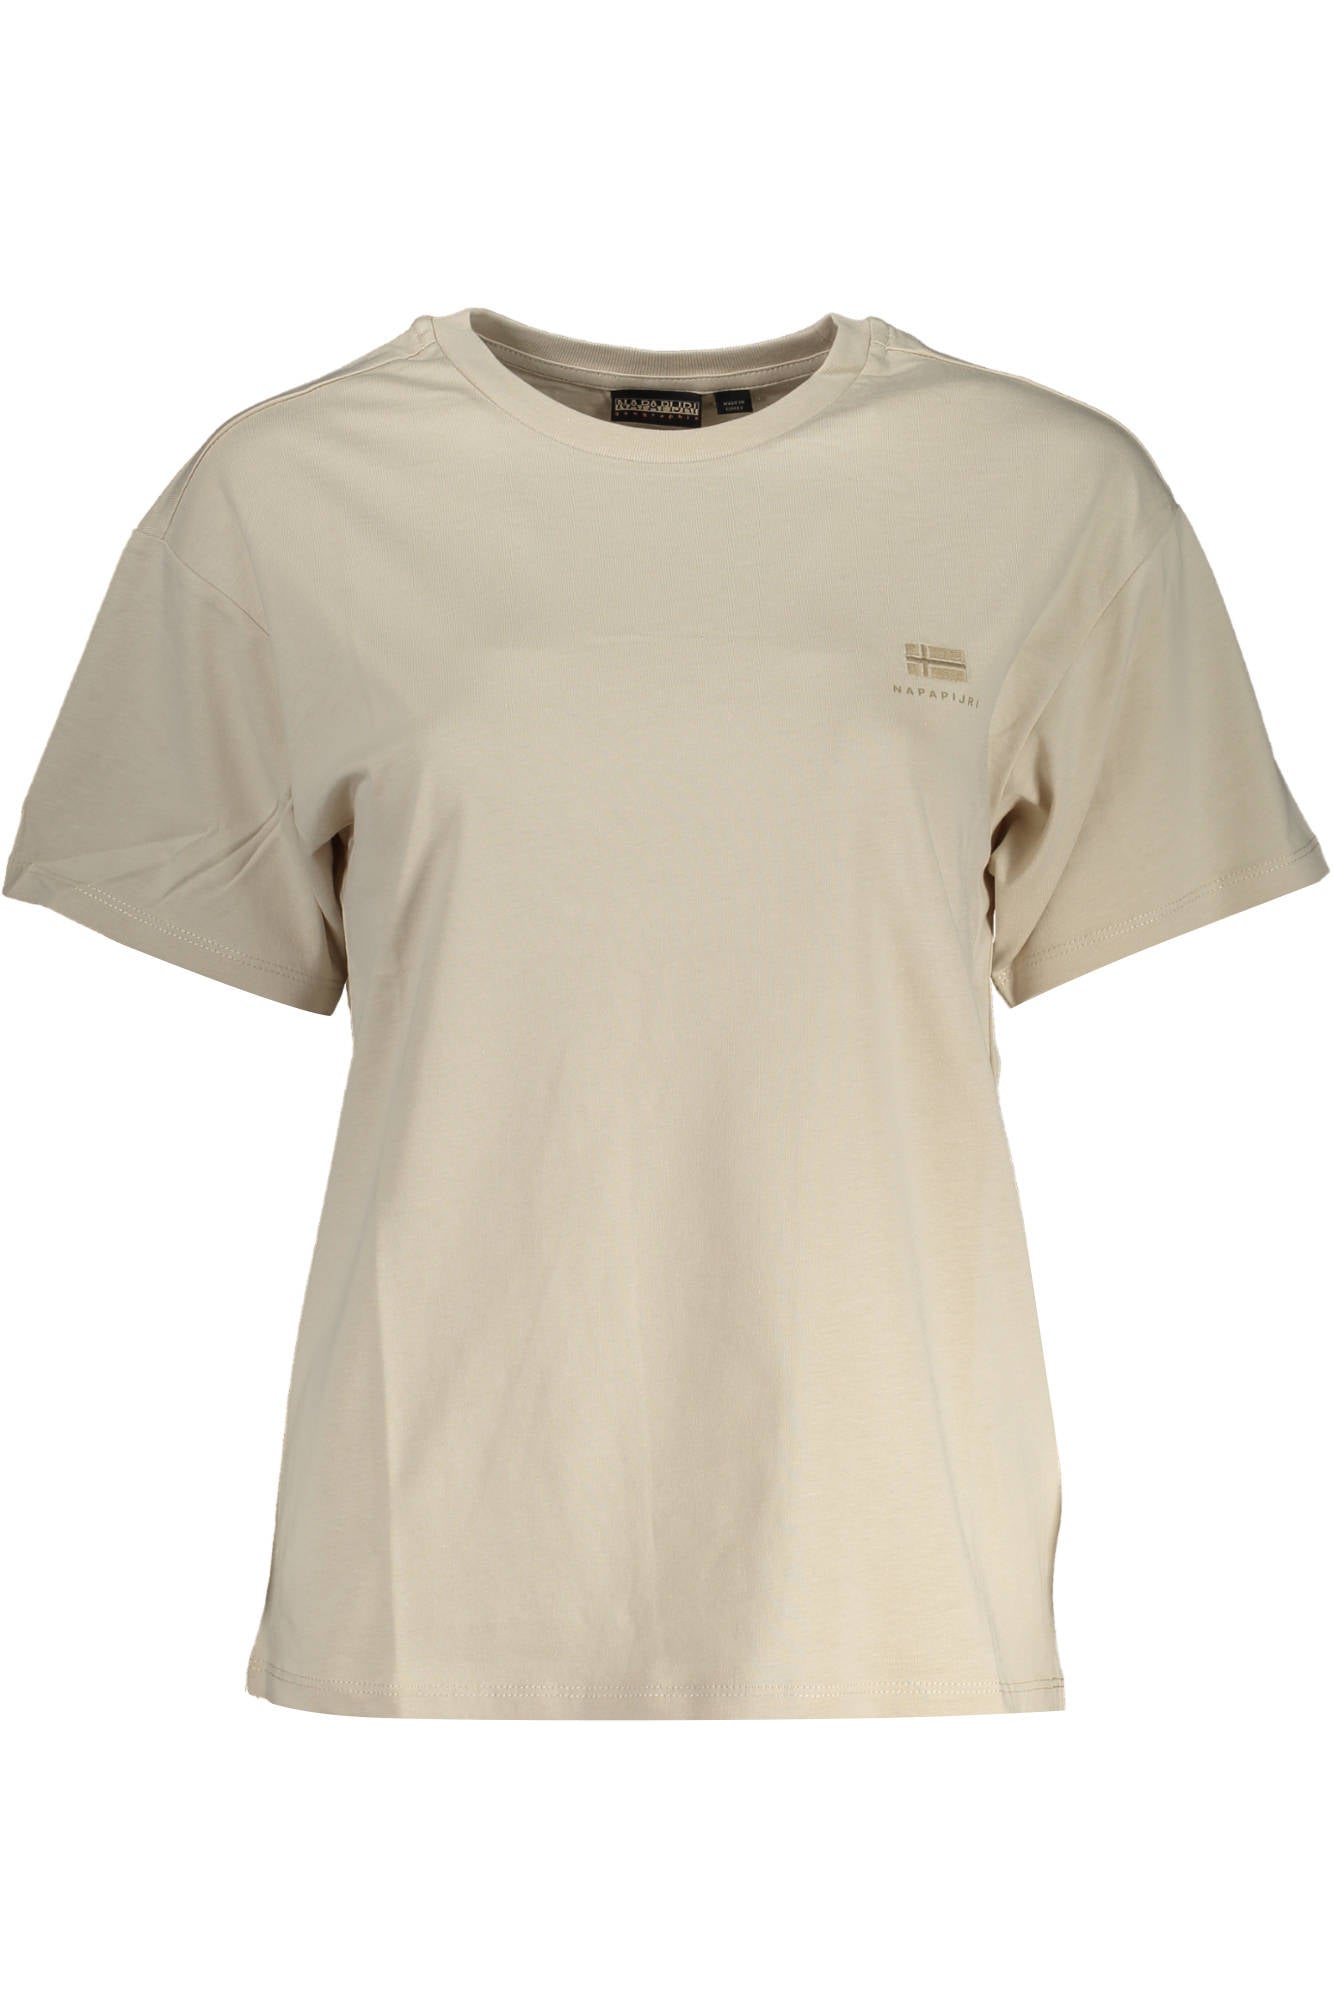 Napapijri Beige Cotton Tops & T-Shirt - Fizigo